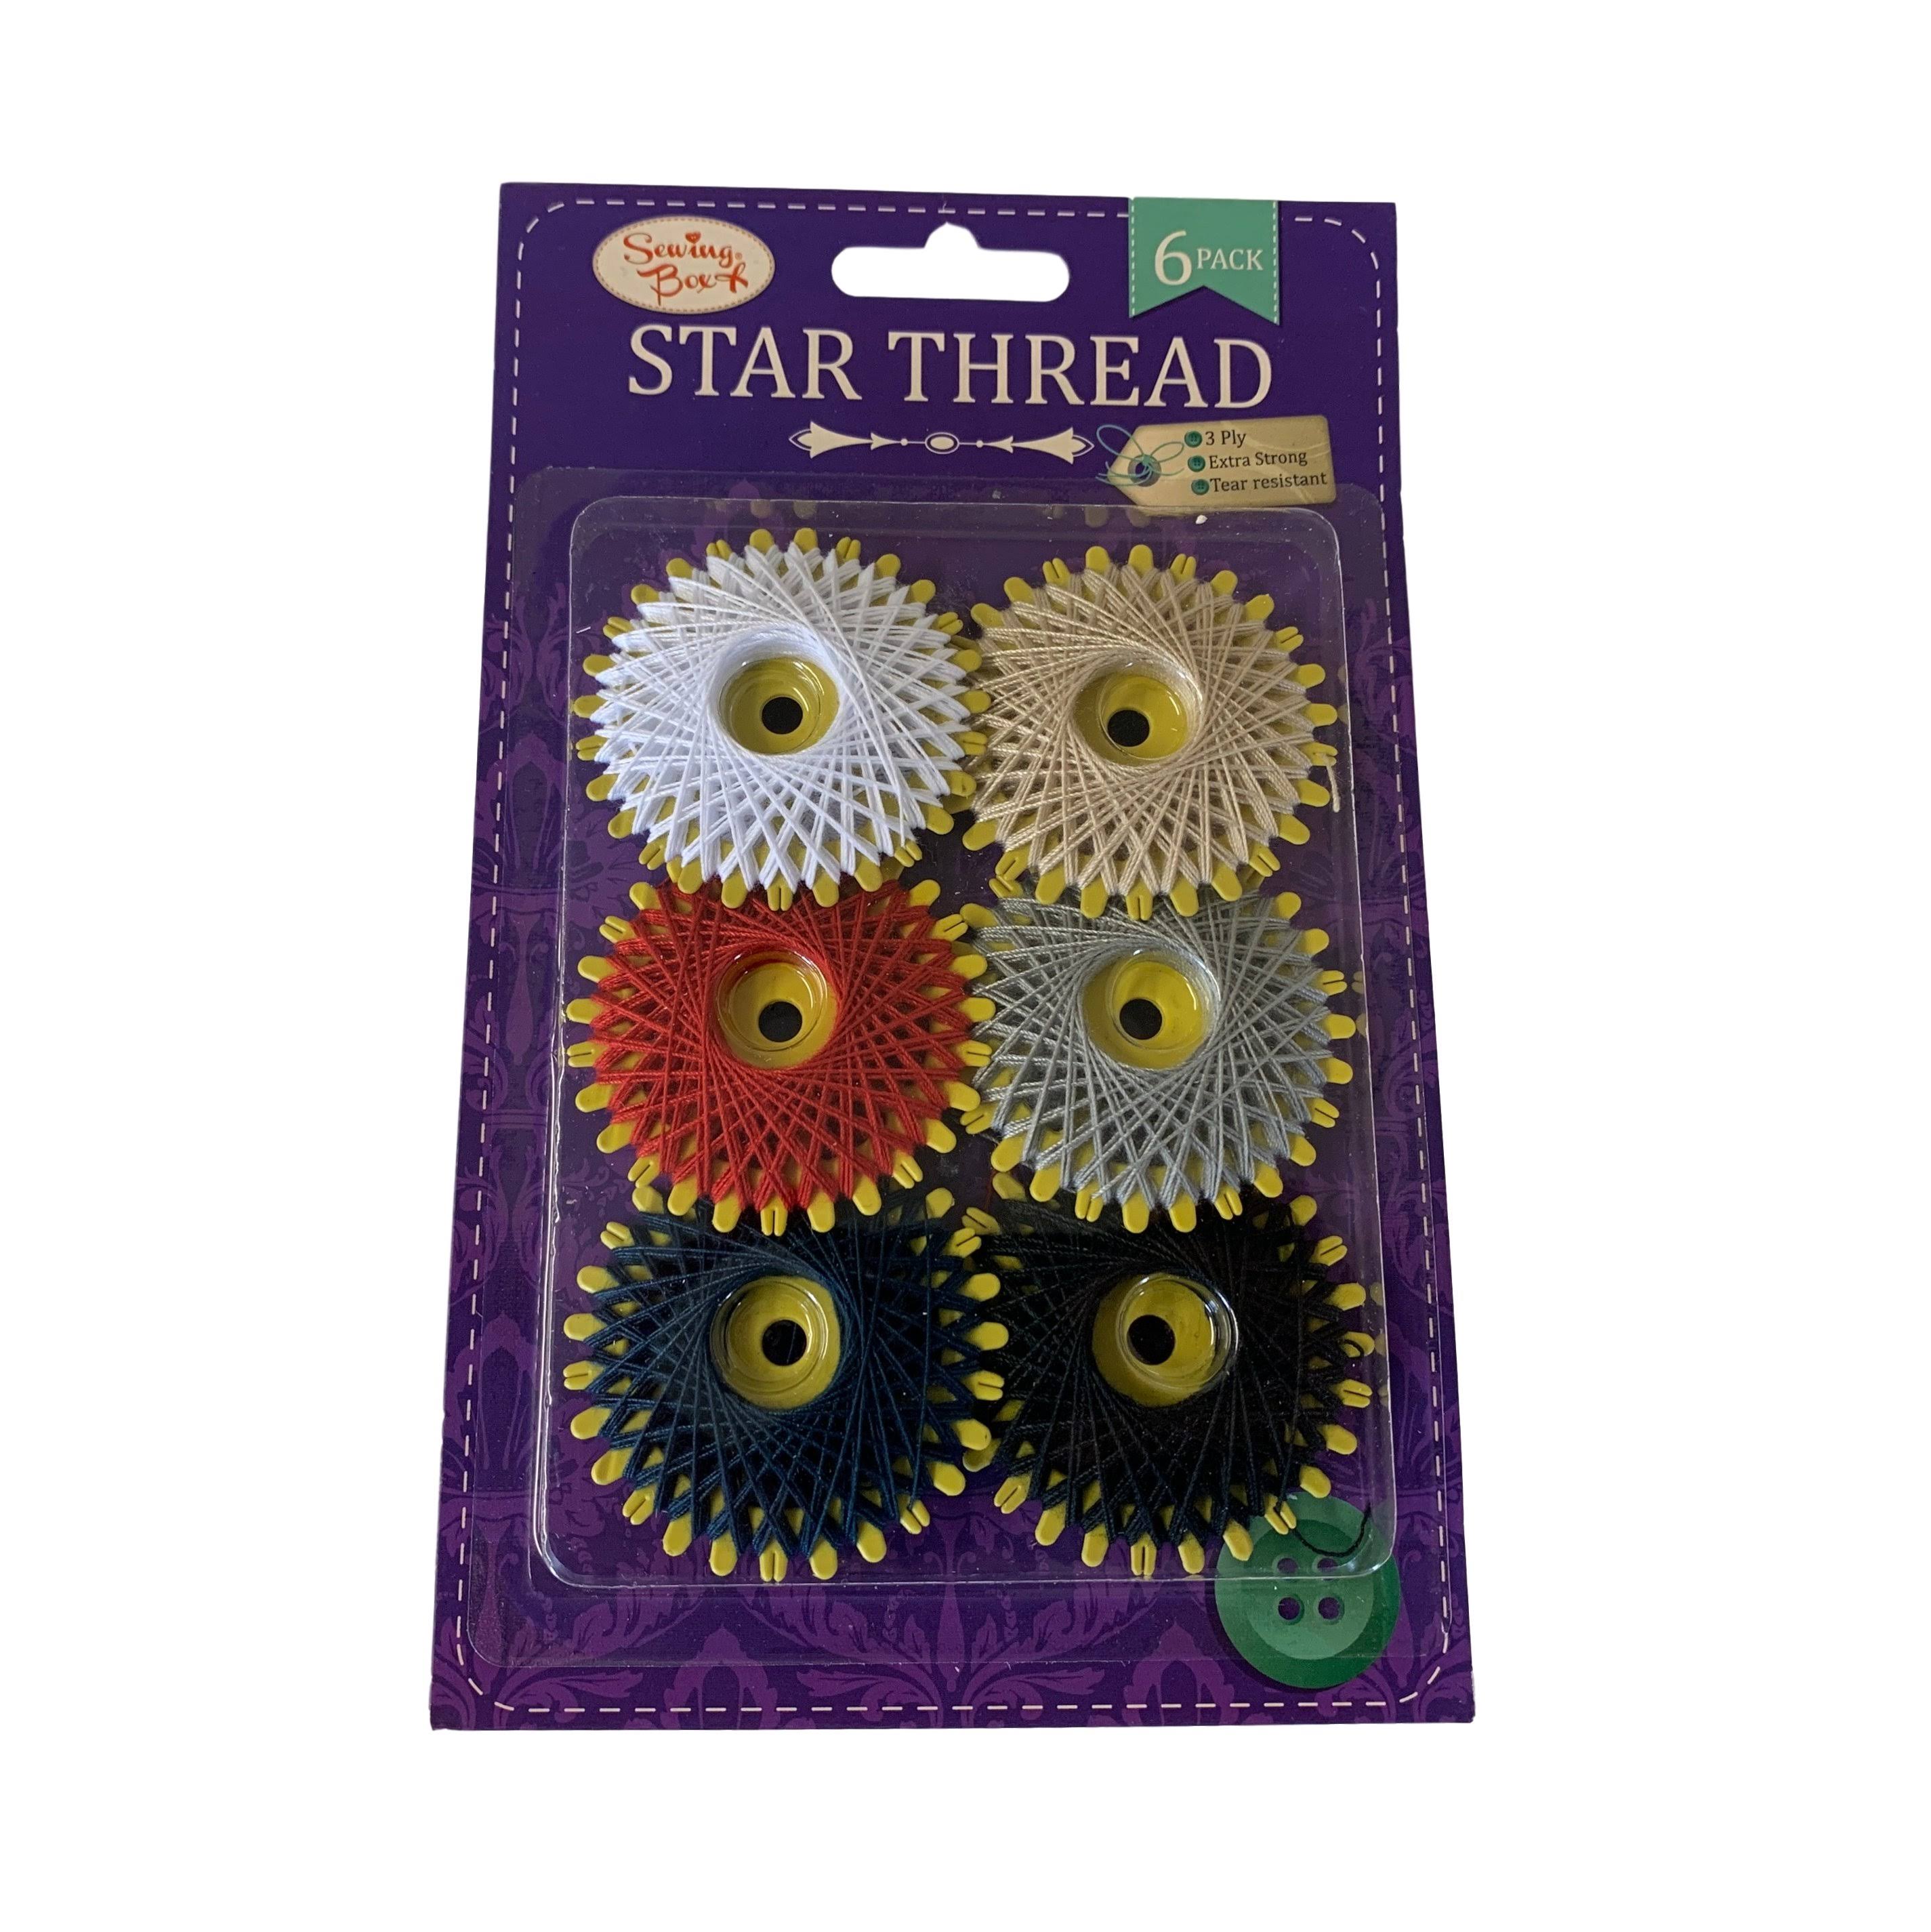 Sewing Box Star Thread 6 Pack